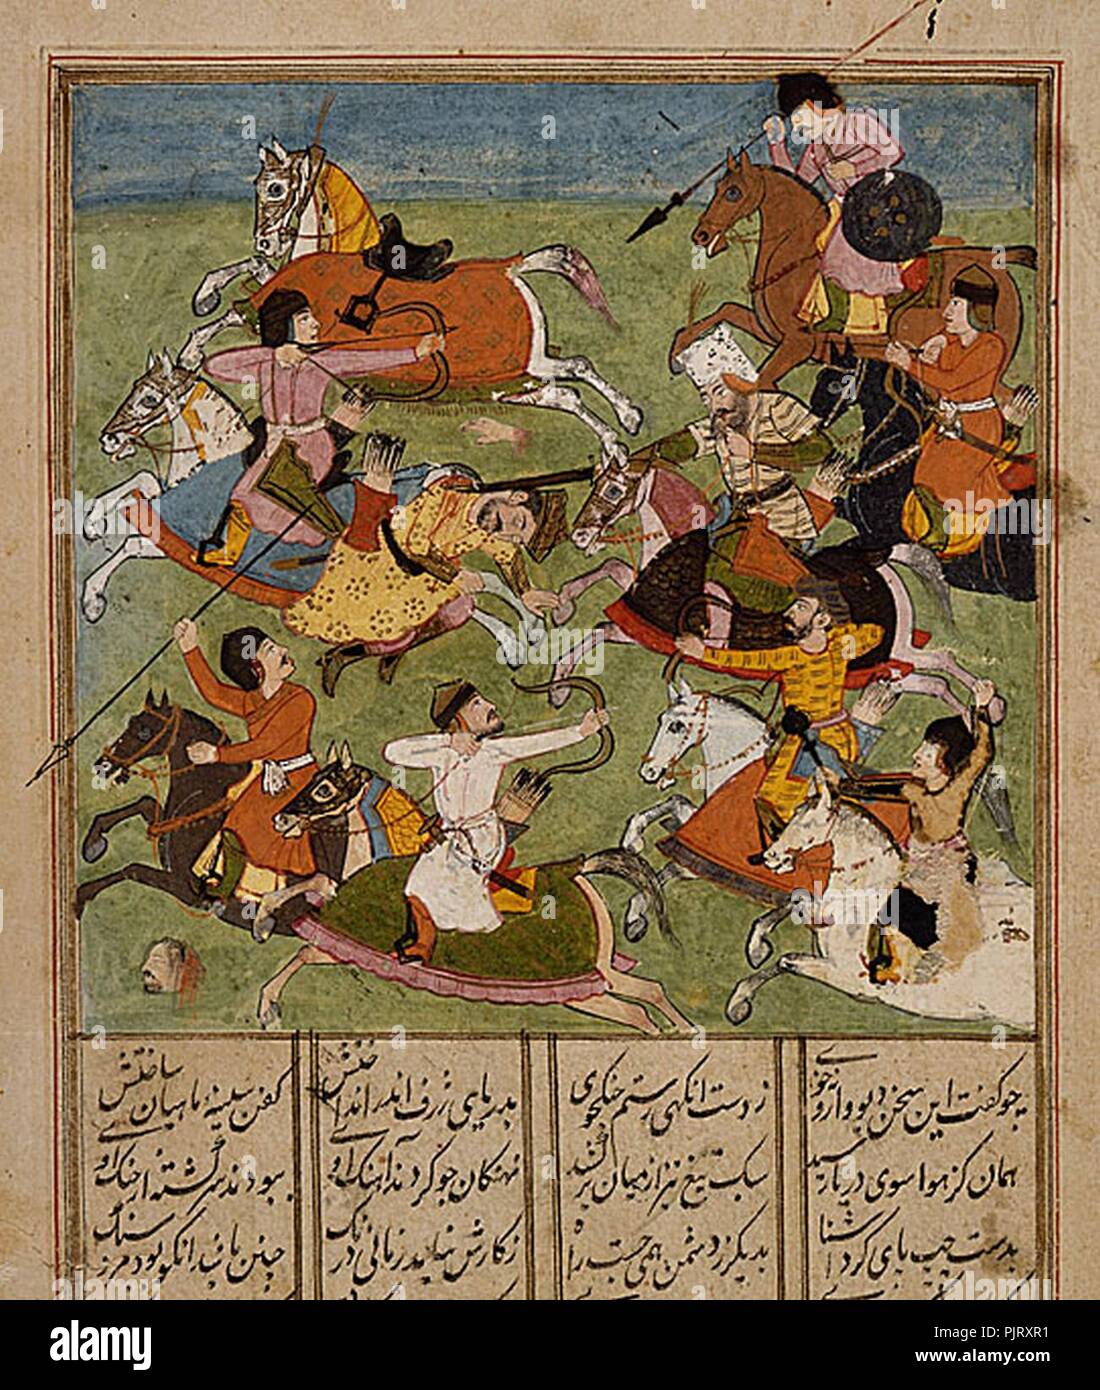 Battle Scene from an early 17th century Shahnama. Stock Photo